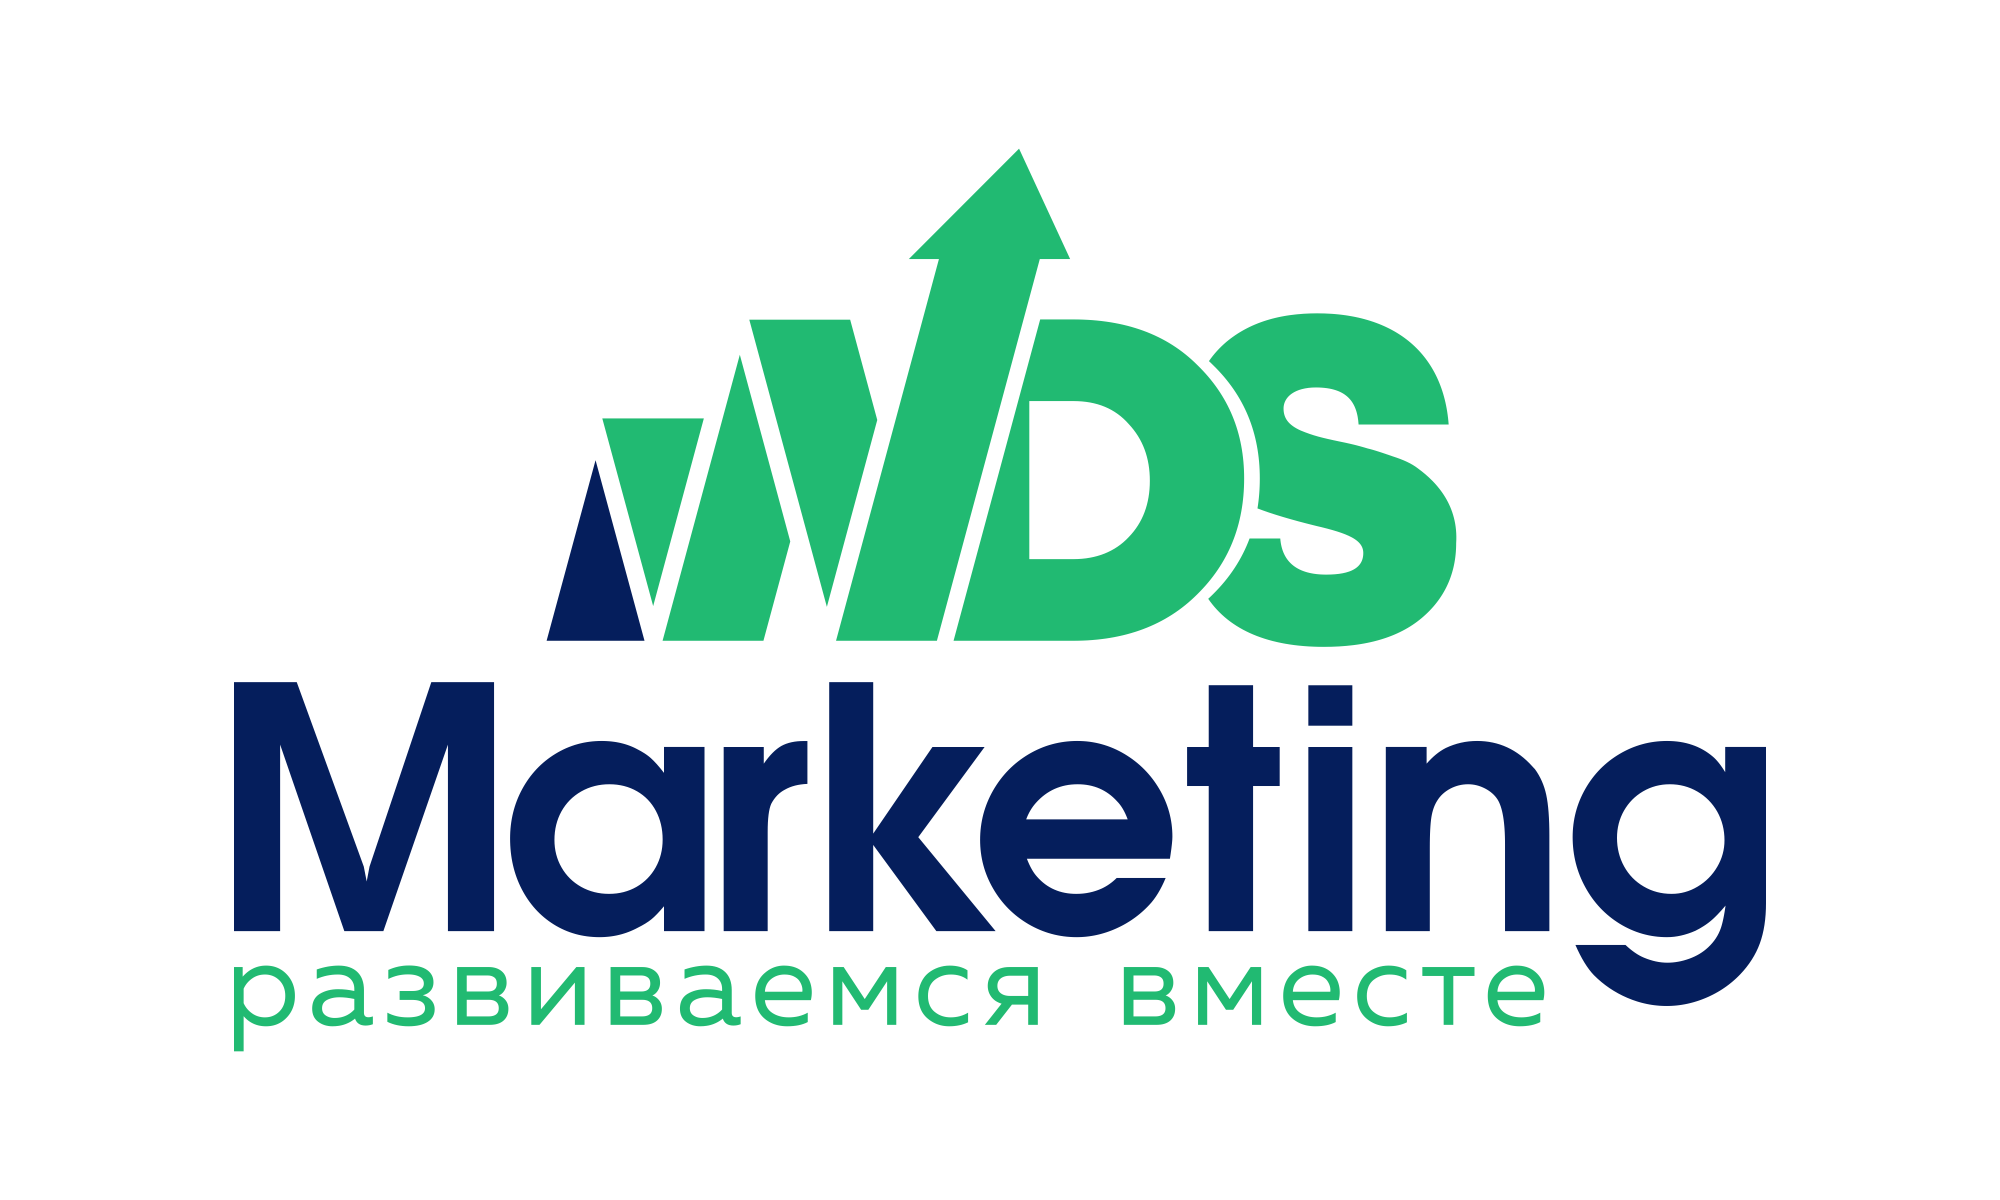 WDS Marketing